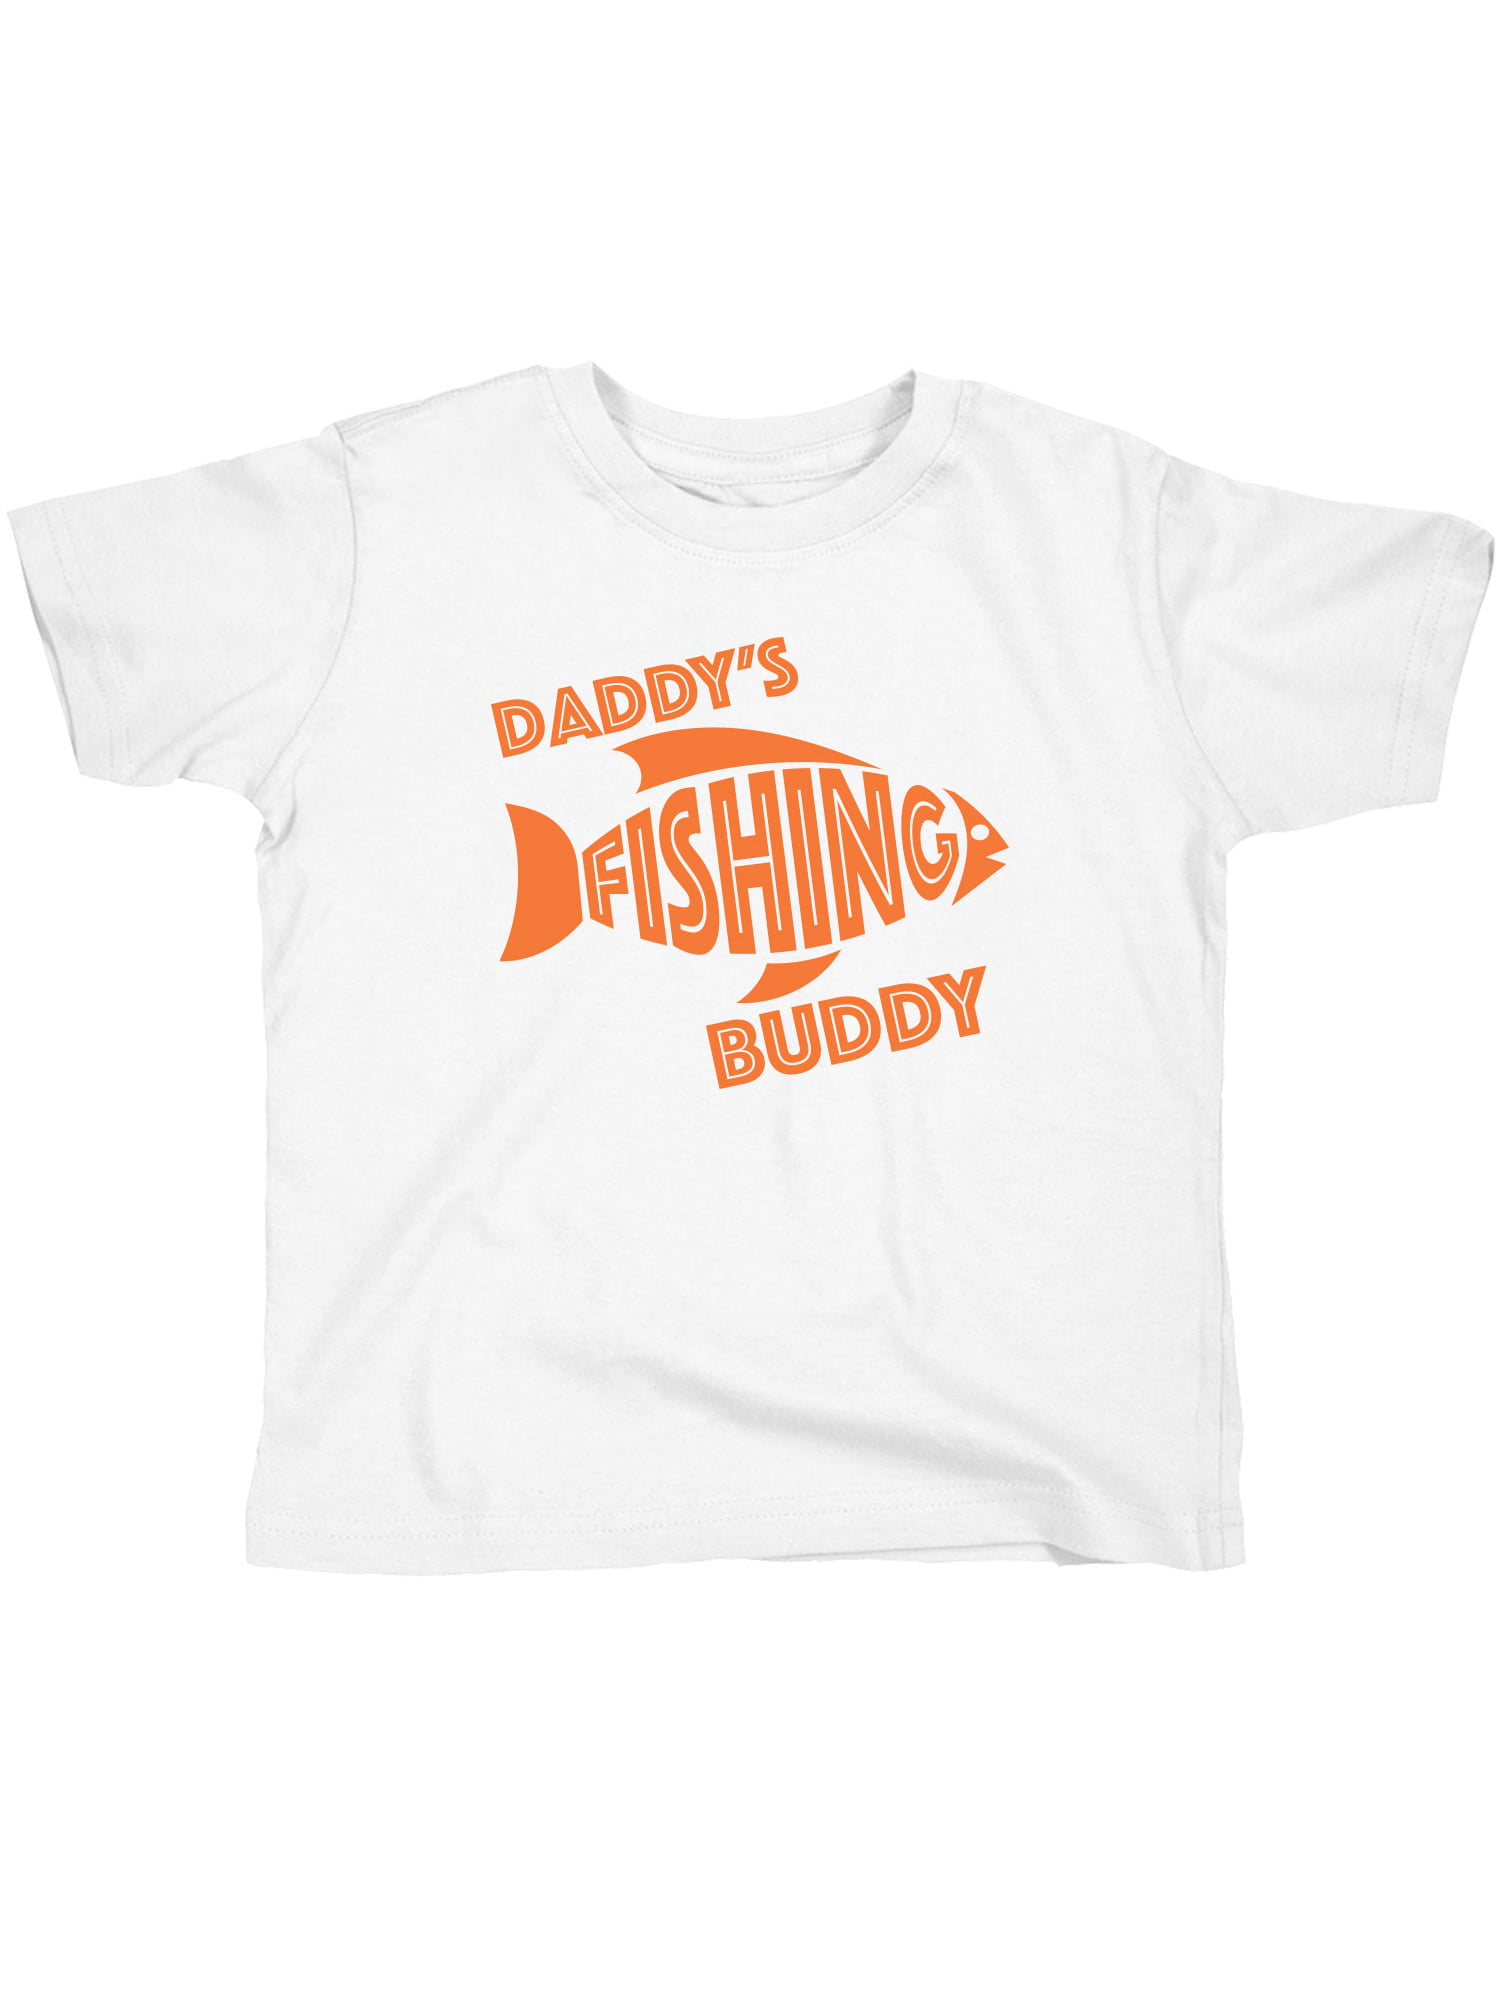 Daddy's Fishing Buddy Cute Funny Boys Children's Kids T Shirts T-Shirt Top 